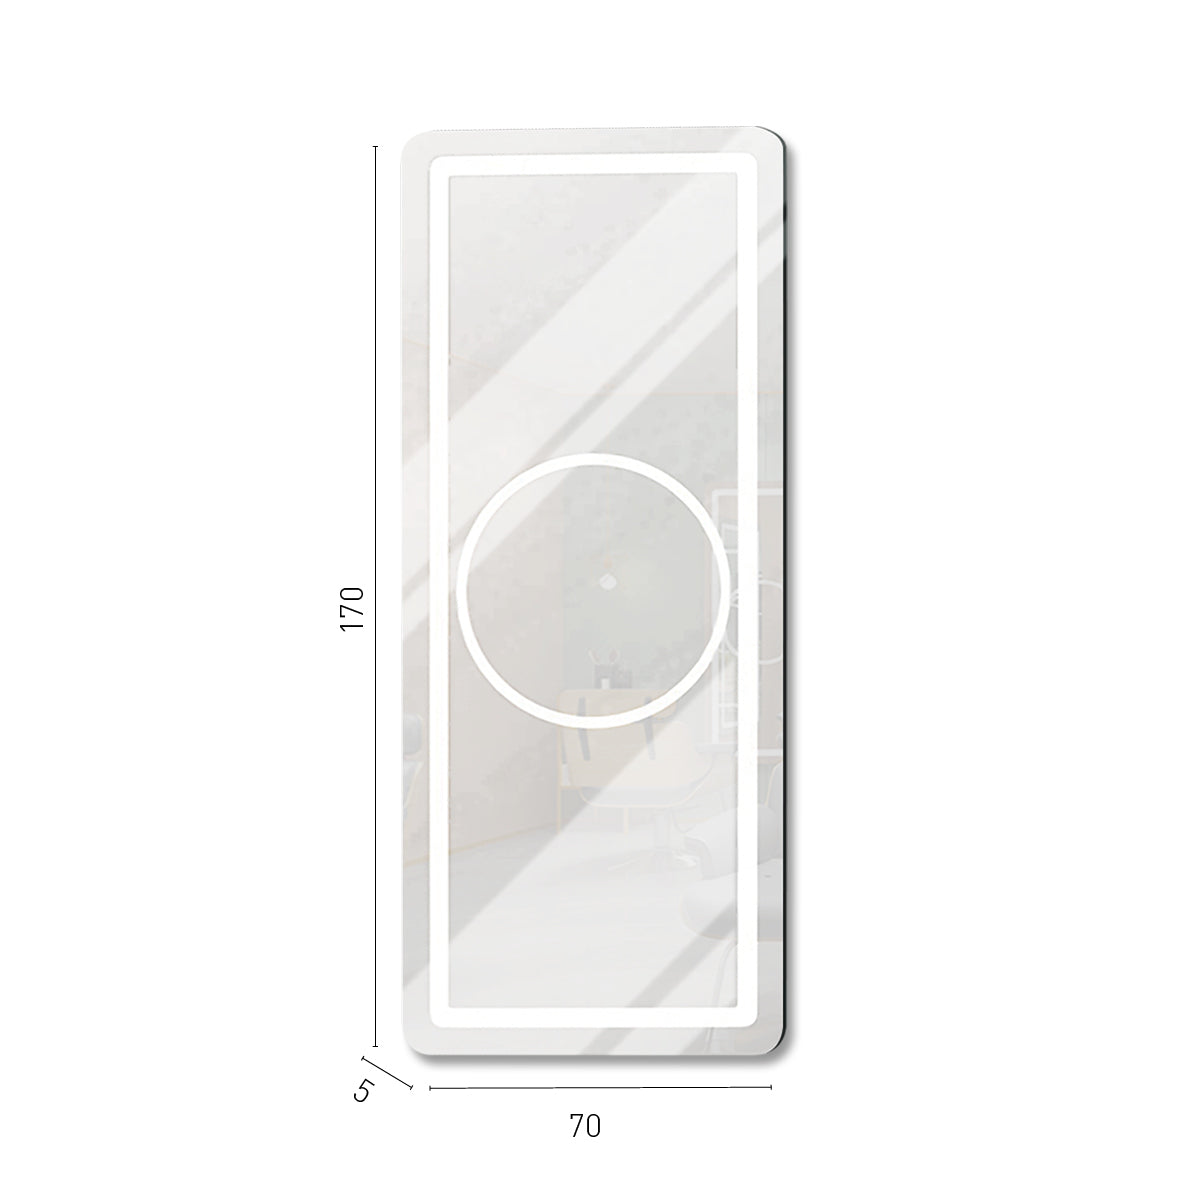 Espejo rectangular sin marco con luz led blanca integrada